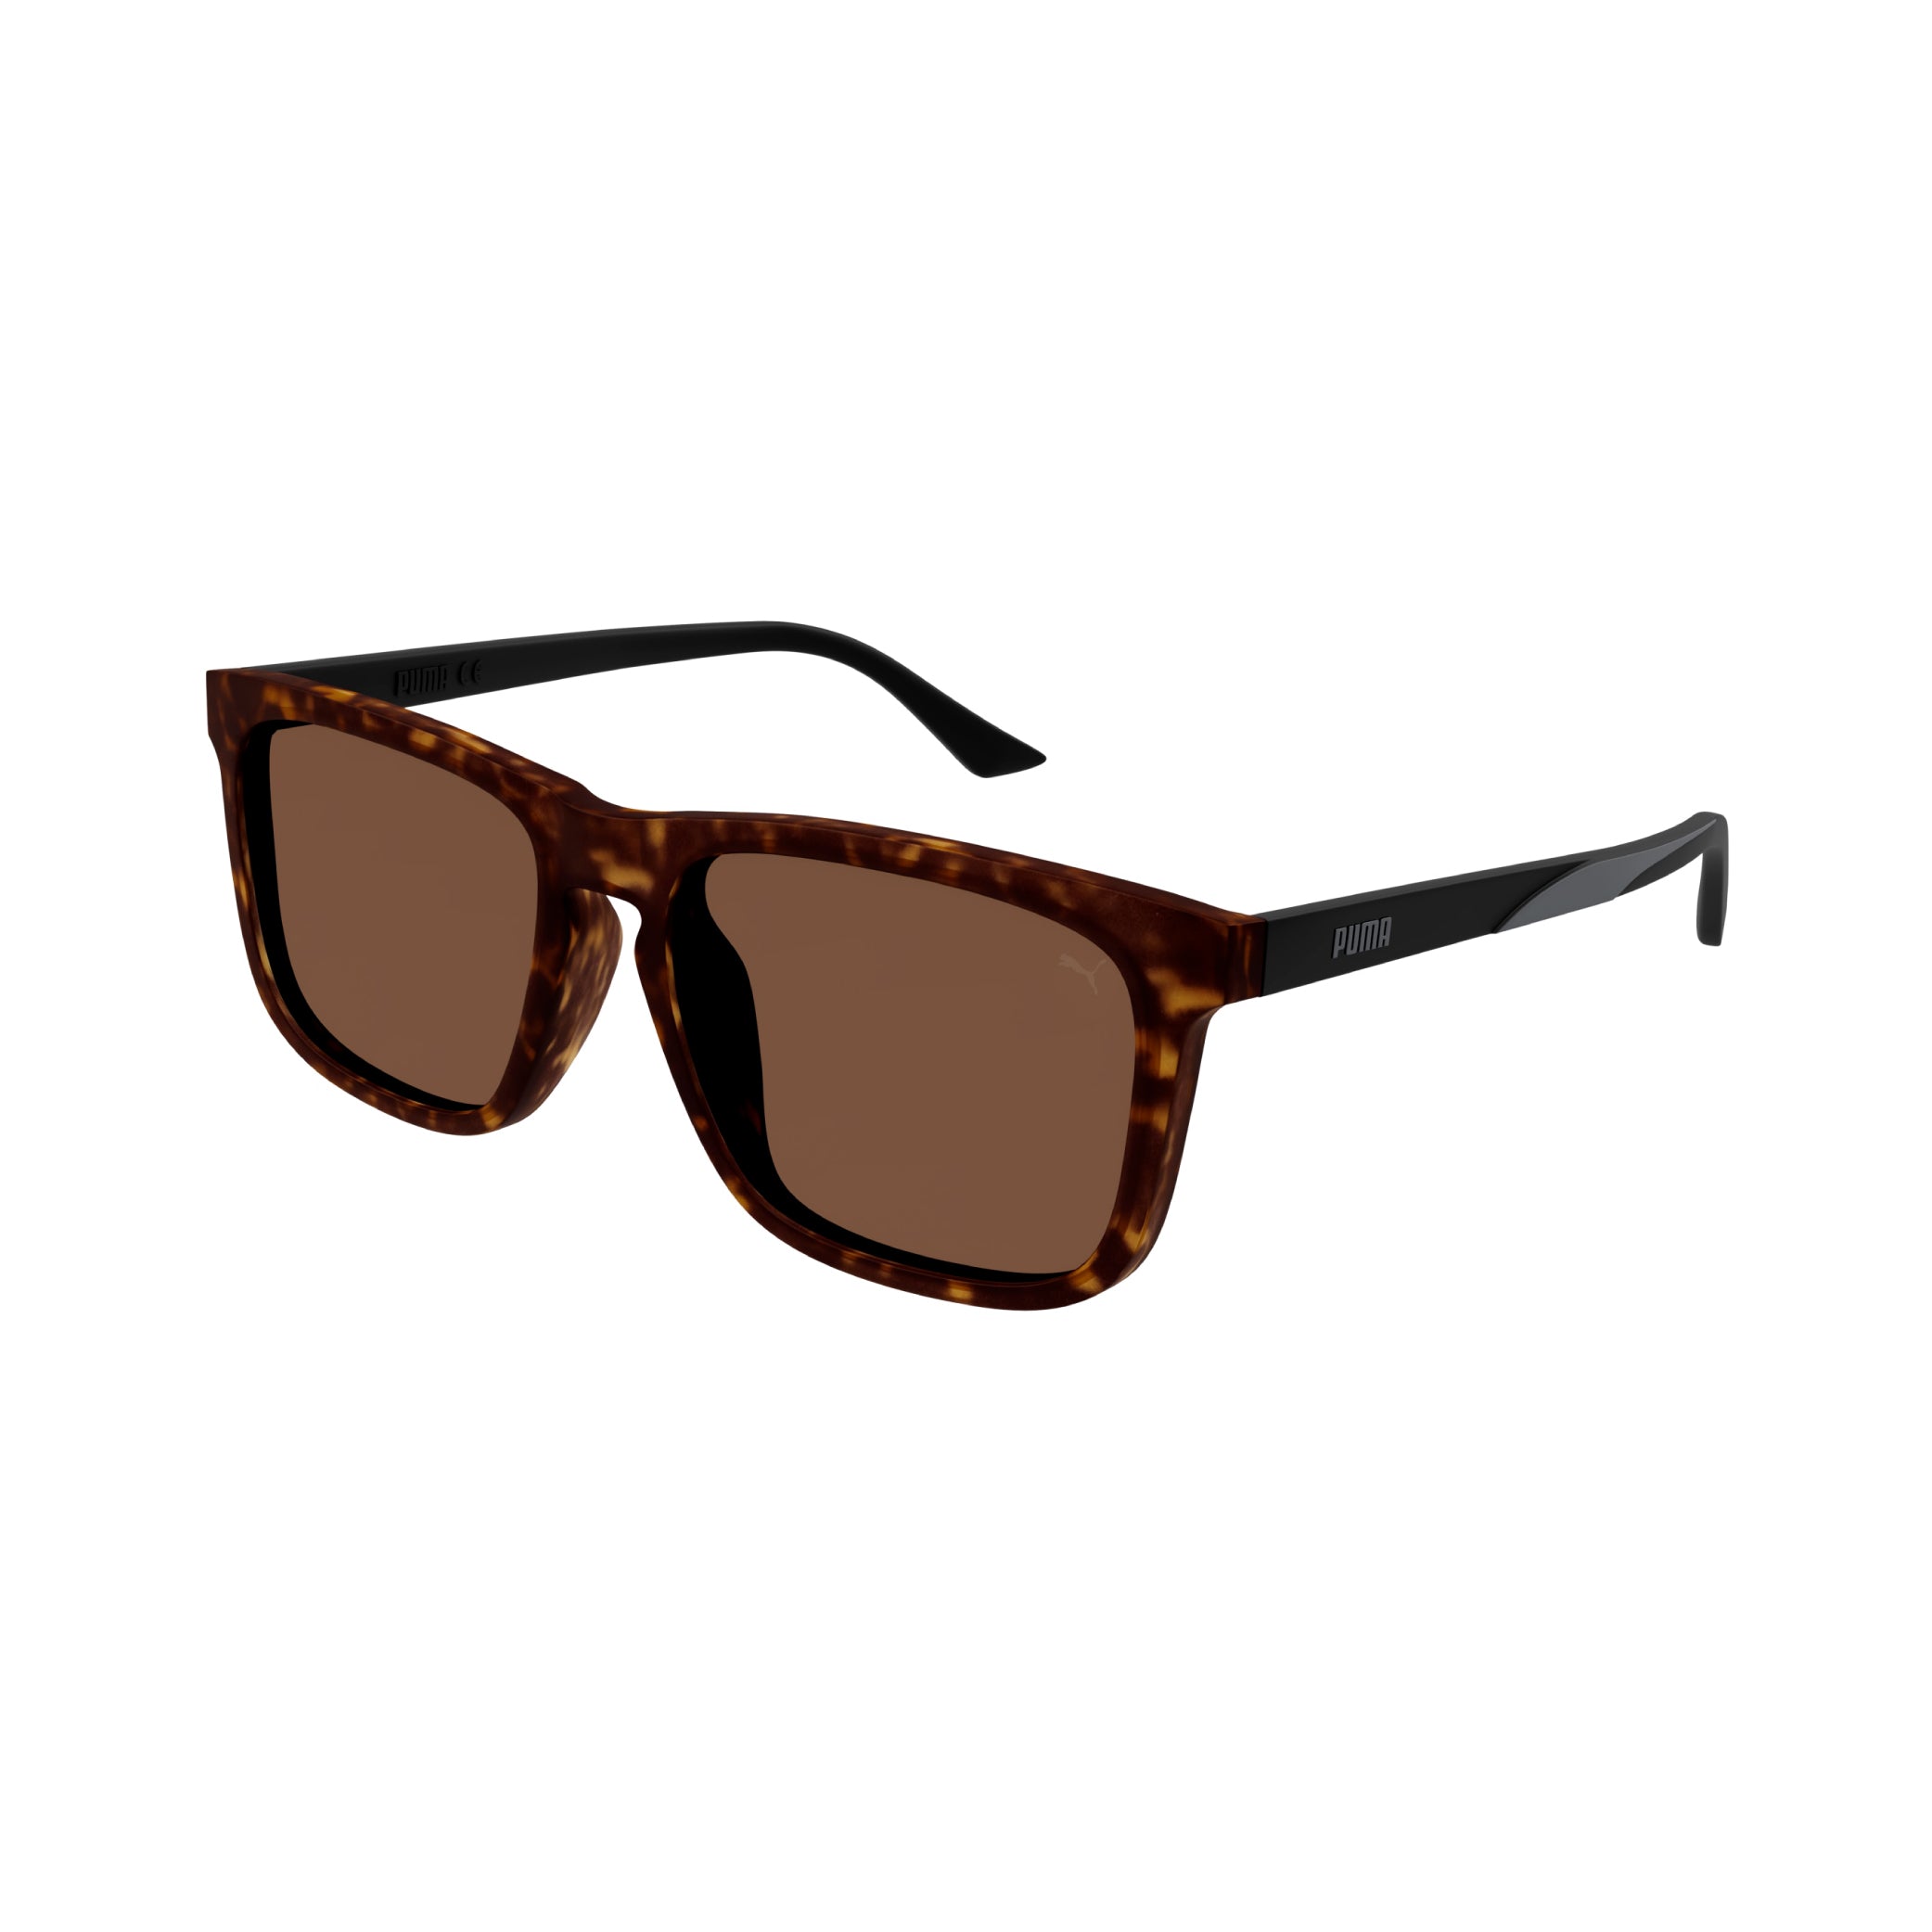 Puma Sunglasses | Calisto.co